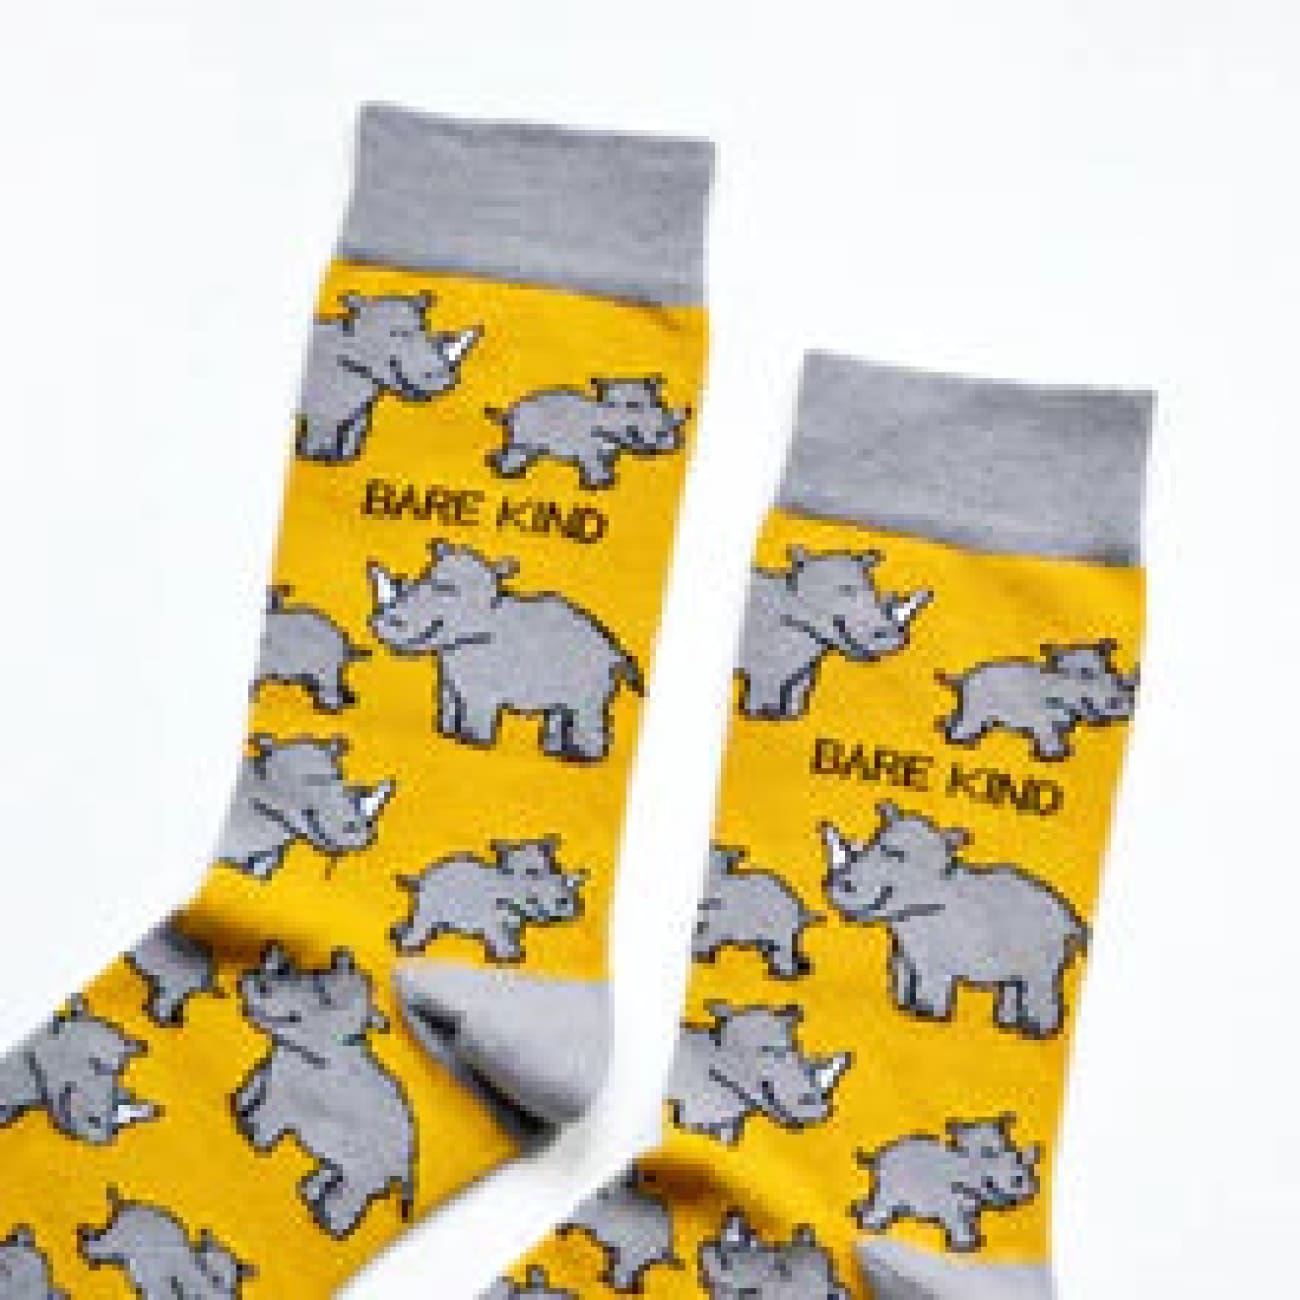 Save the Rhinos Bamboo Socks - bamboo sock Brand Bare Kind